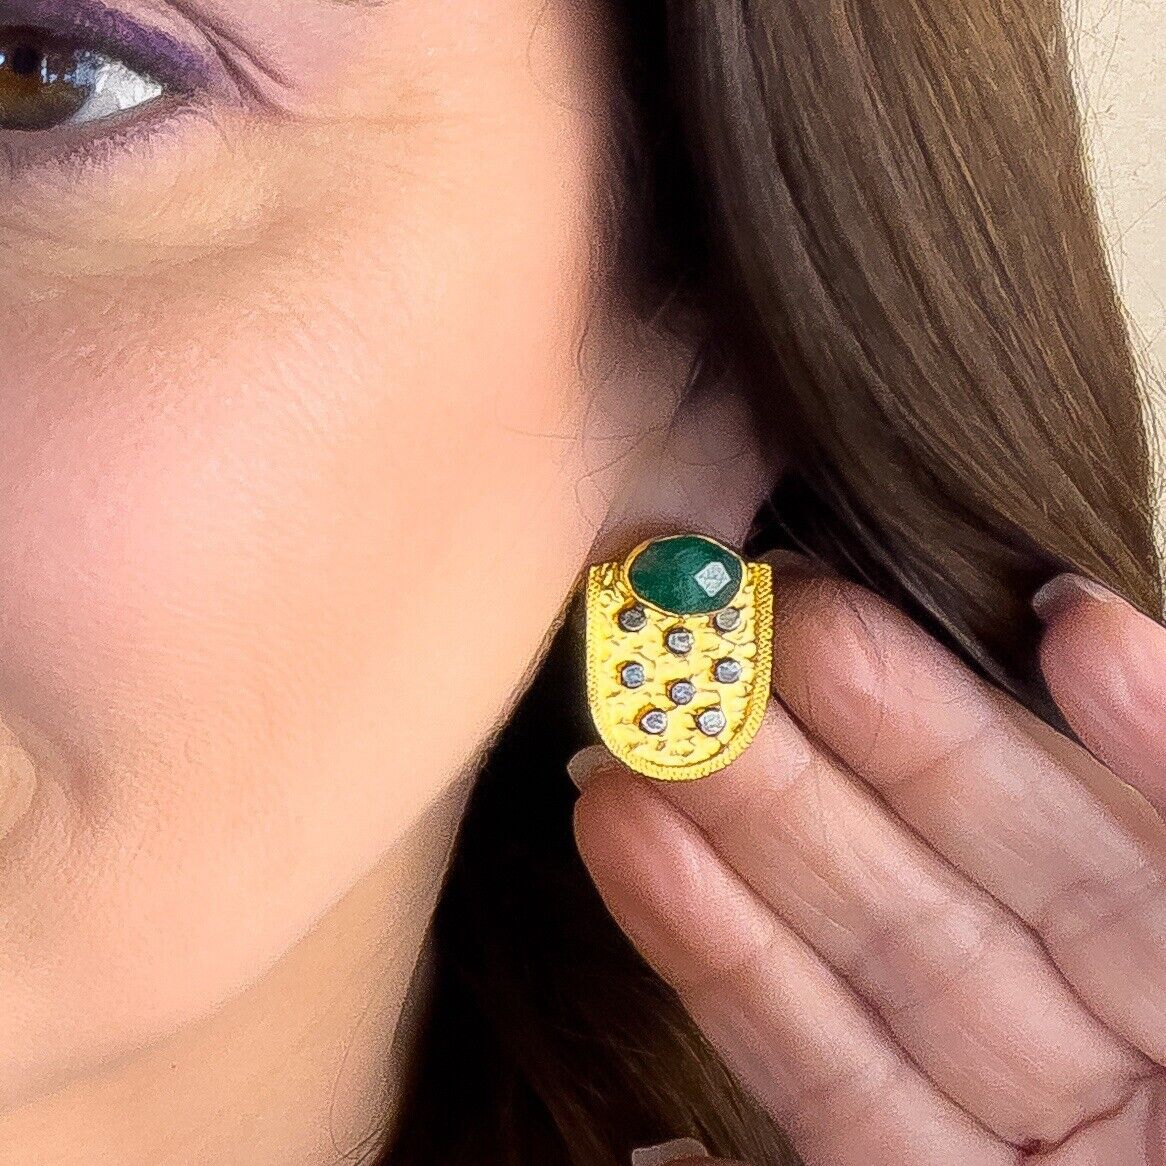 Genuine Emerald 22k Gold Over Sterling Silver Dangle Earrings, New